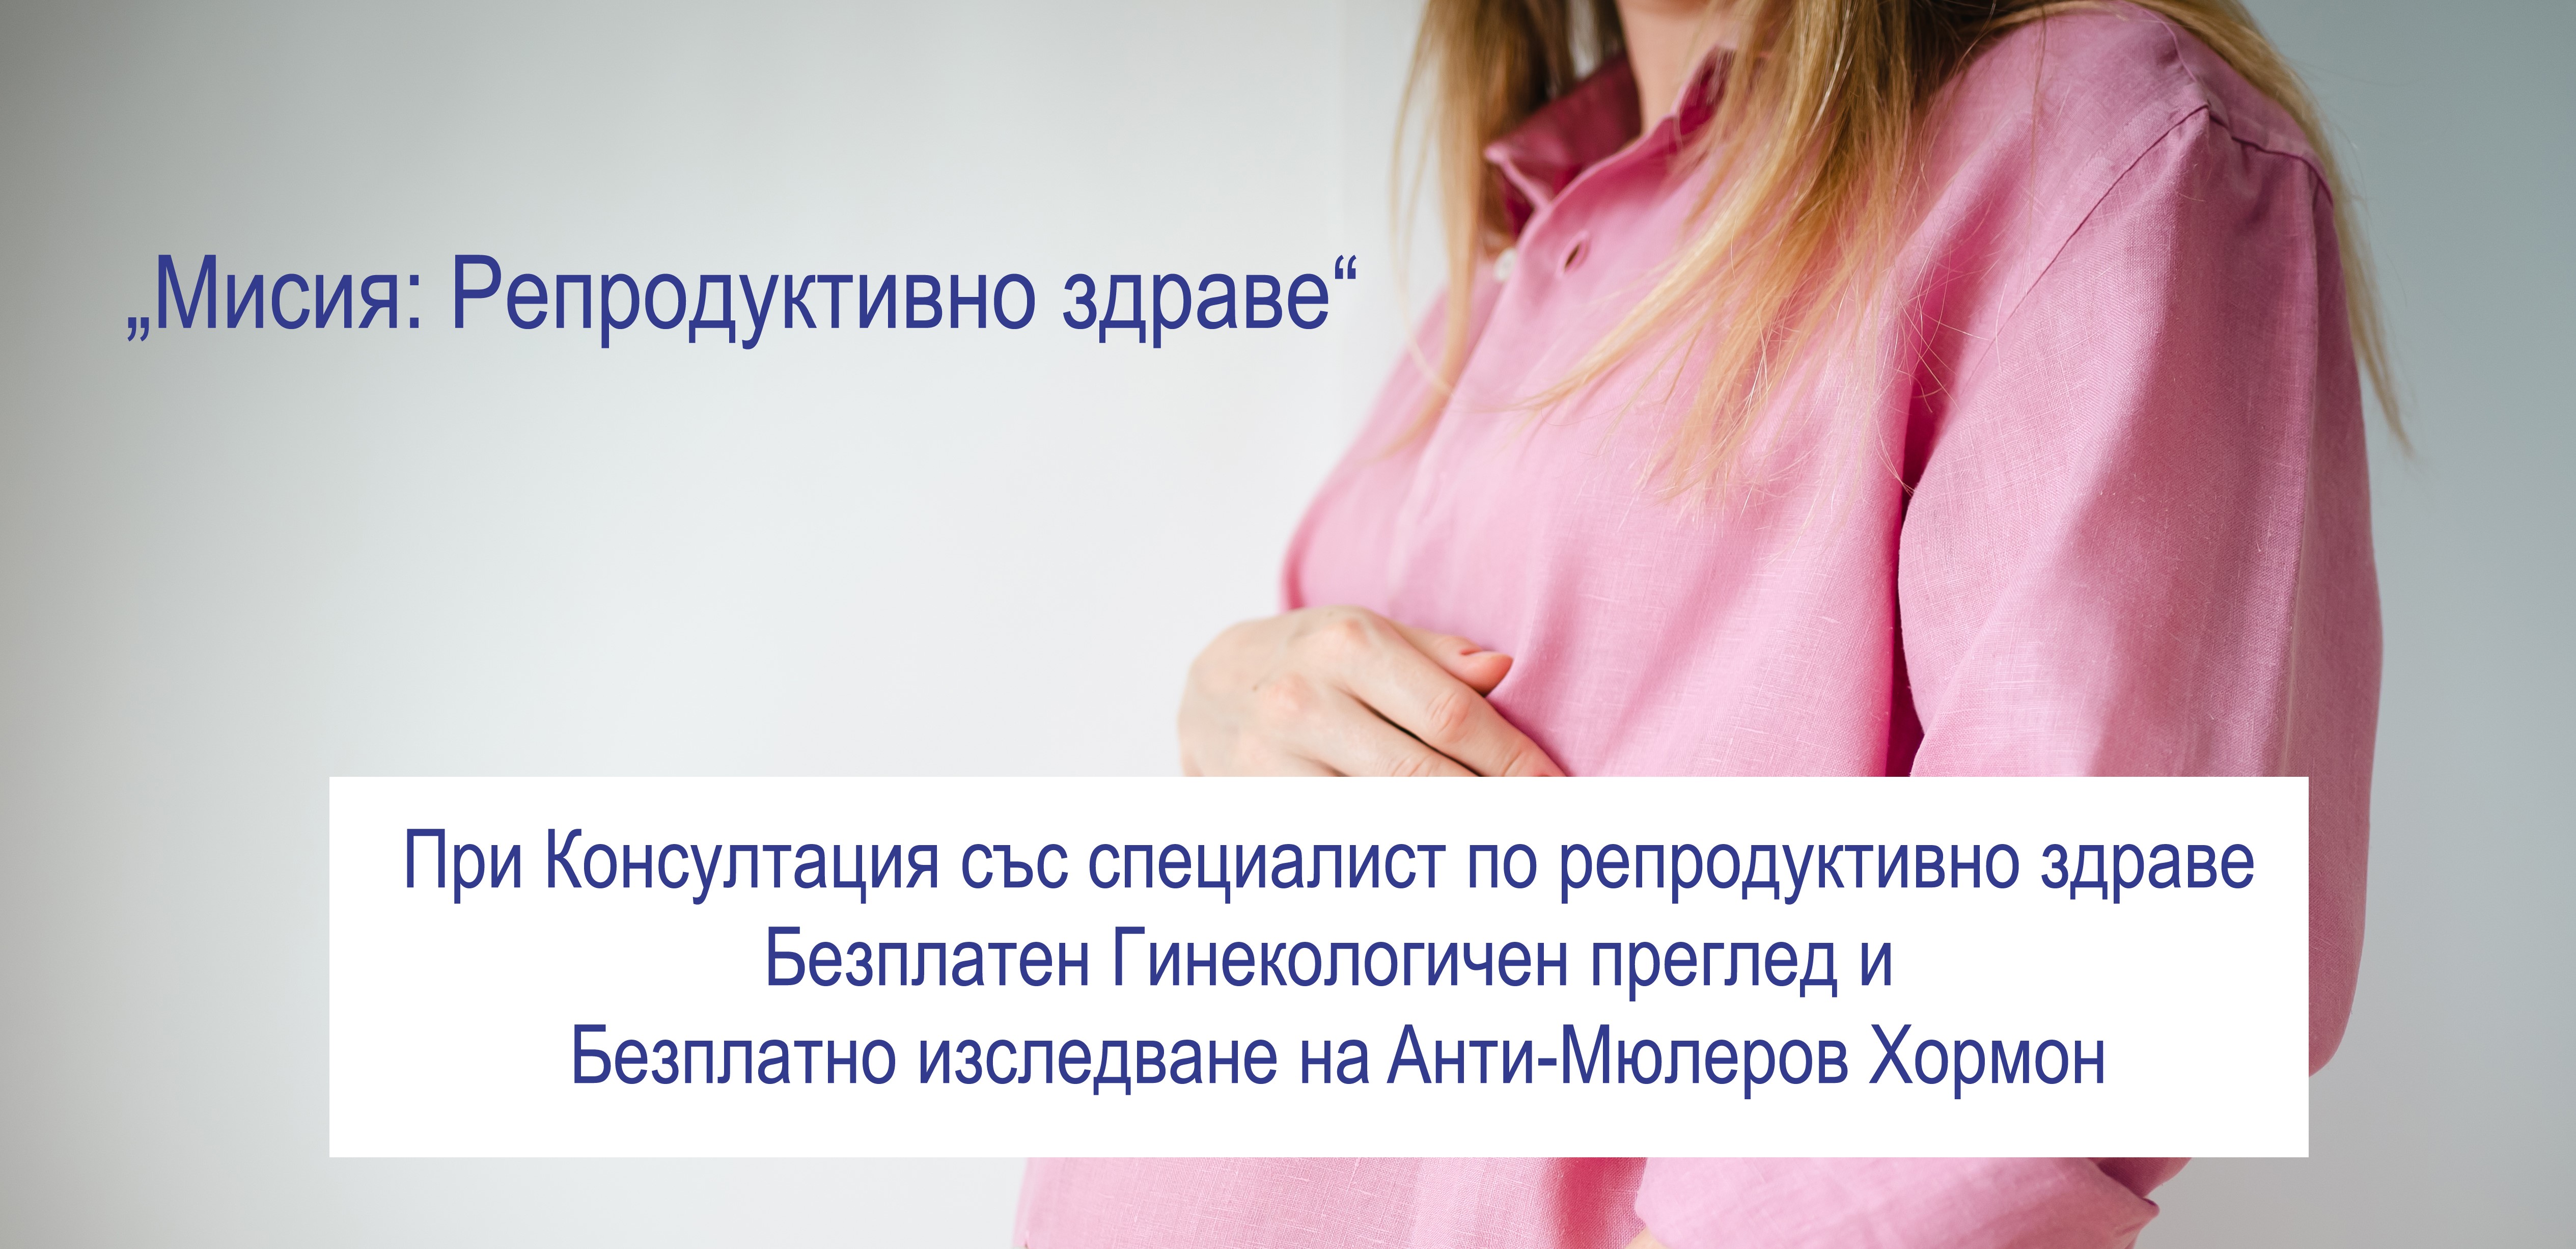 pregnant-woman-underwear-pink-shirt-stands-white-background-2